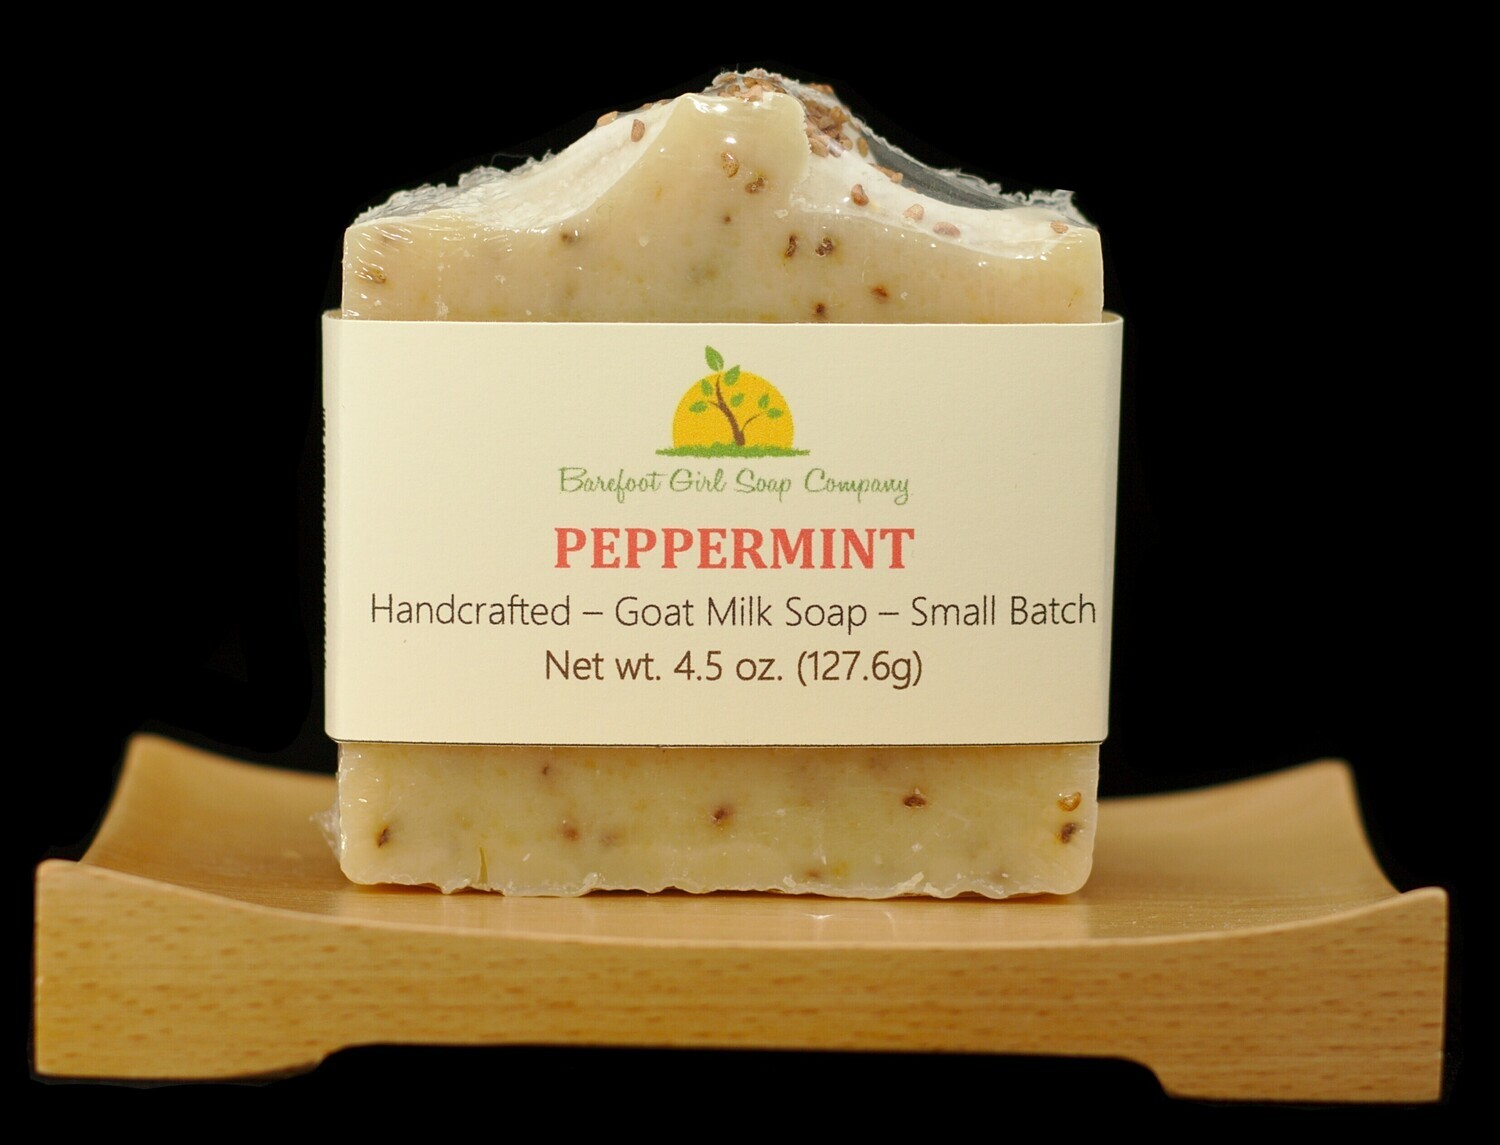 Peppermint Soap